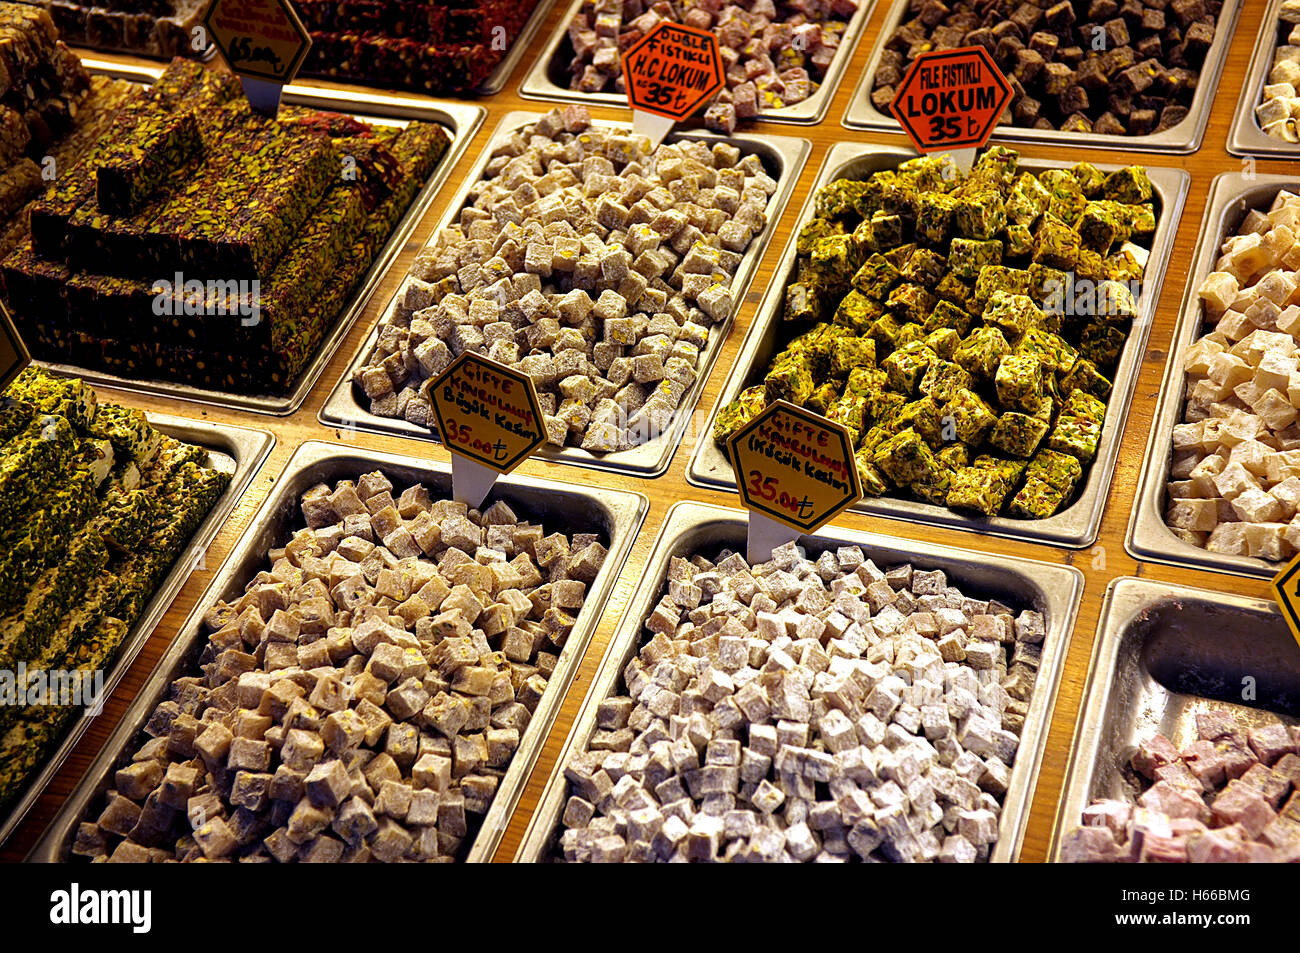 Turkish Delight / Lokum / Candy Foto Stock